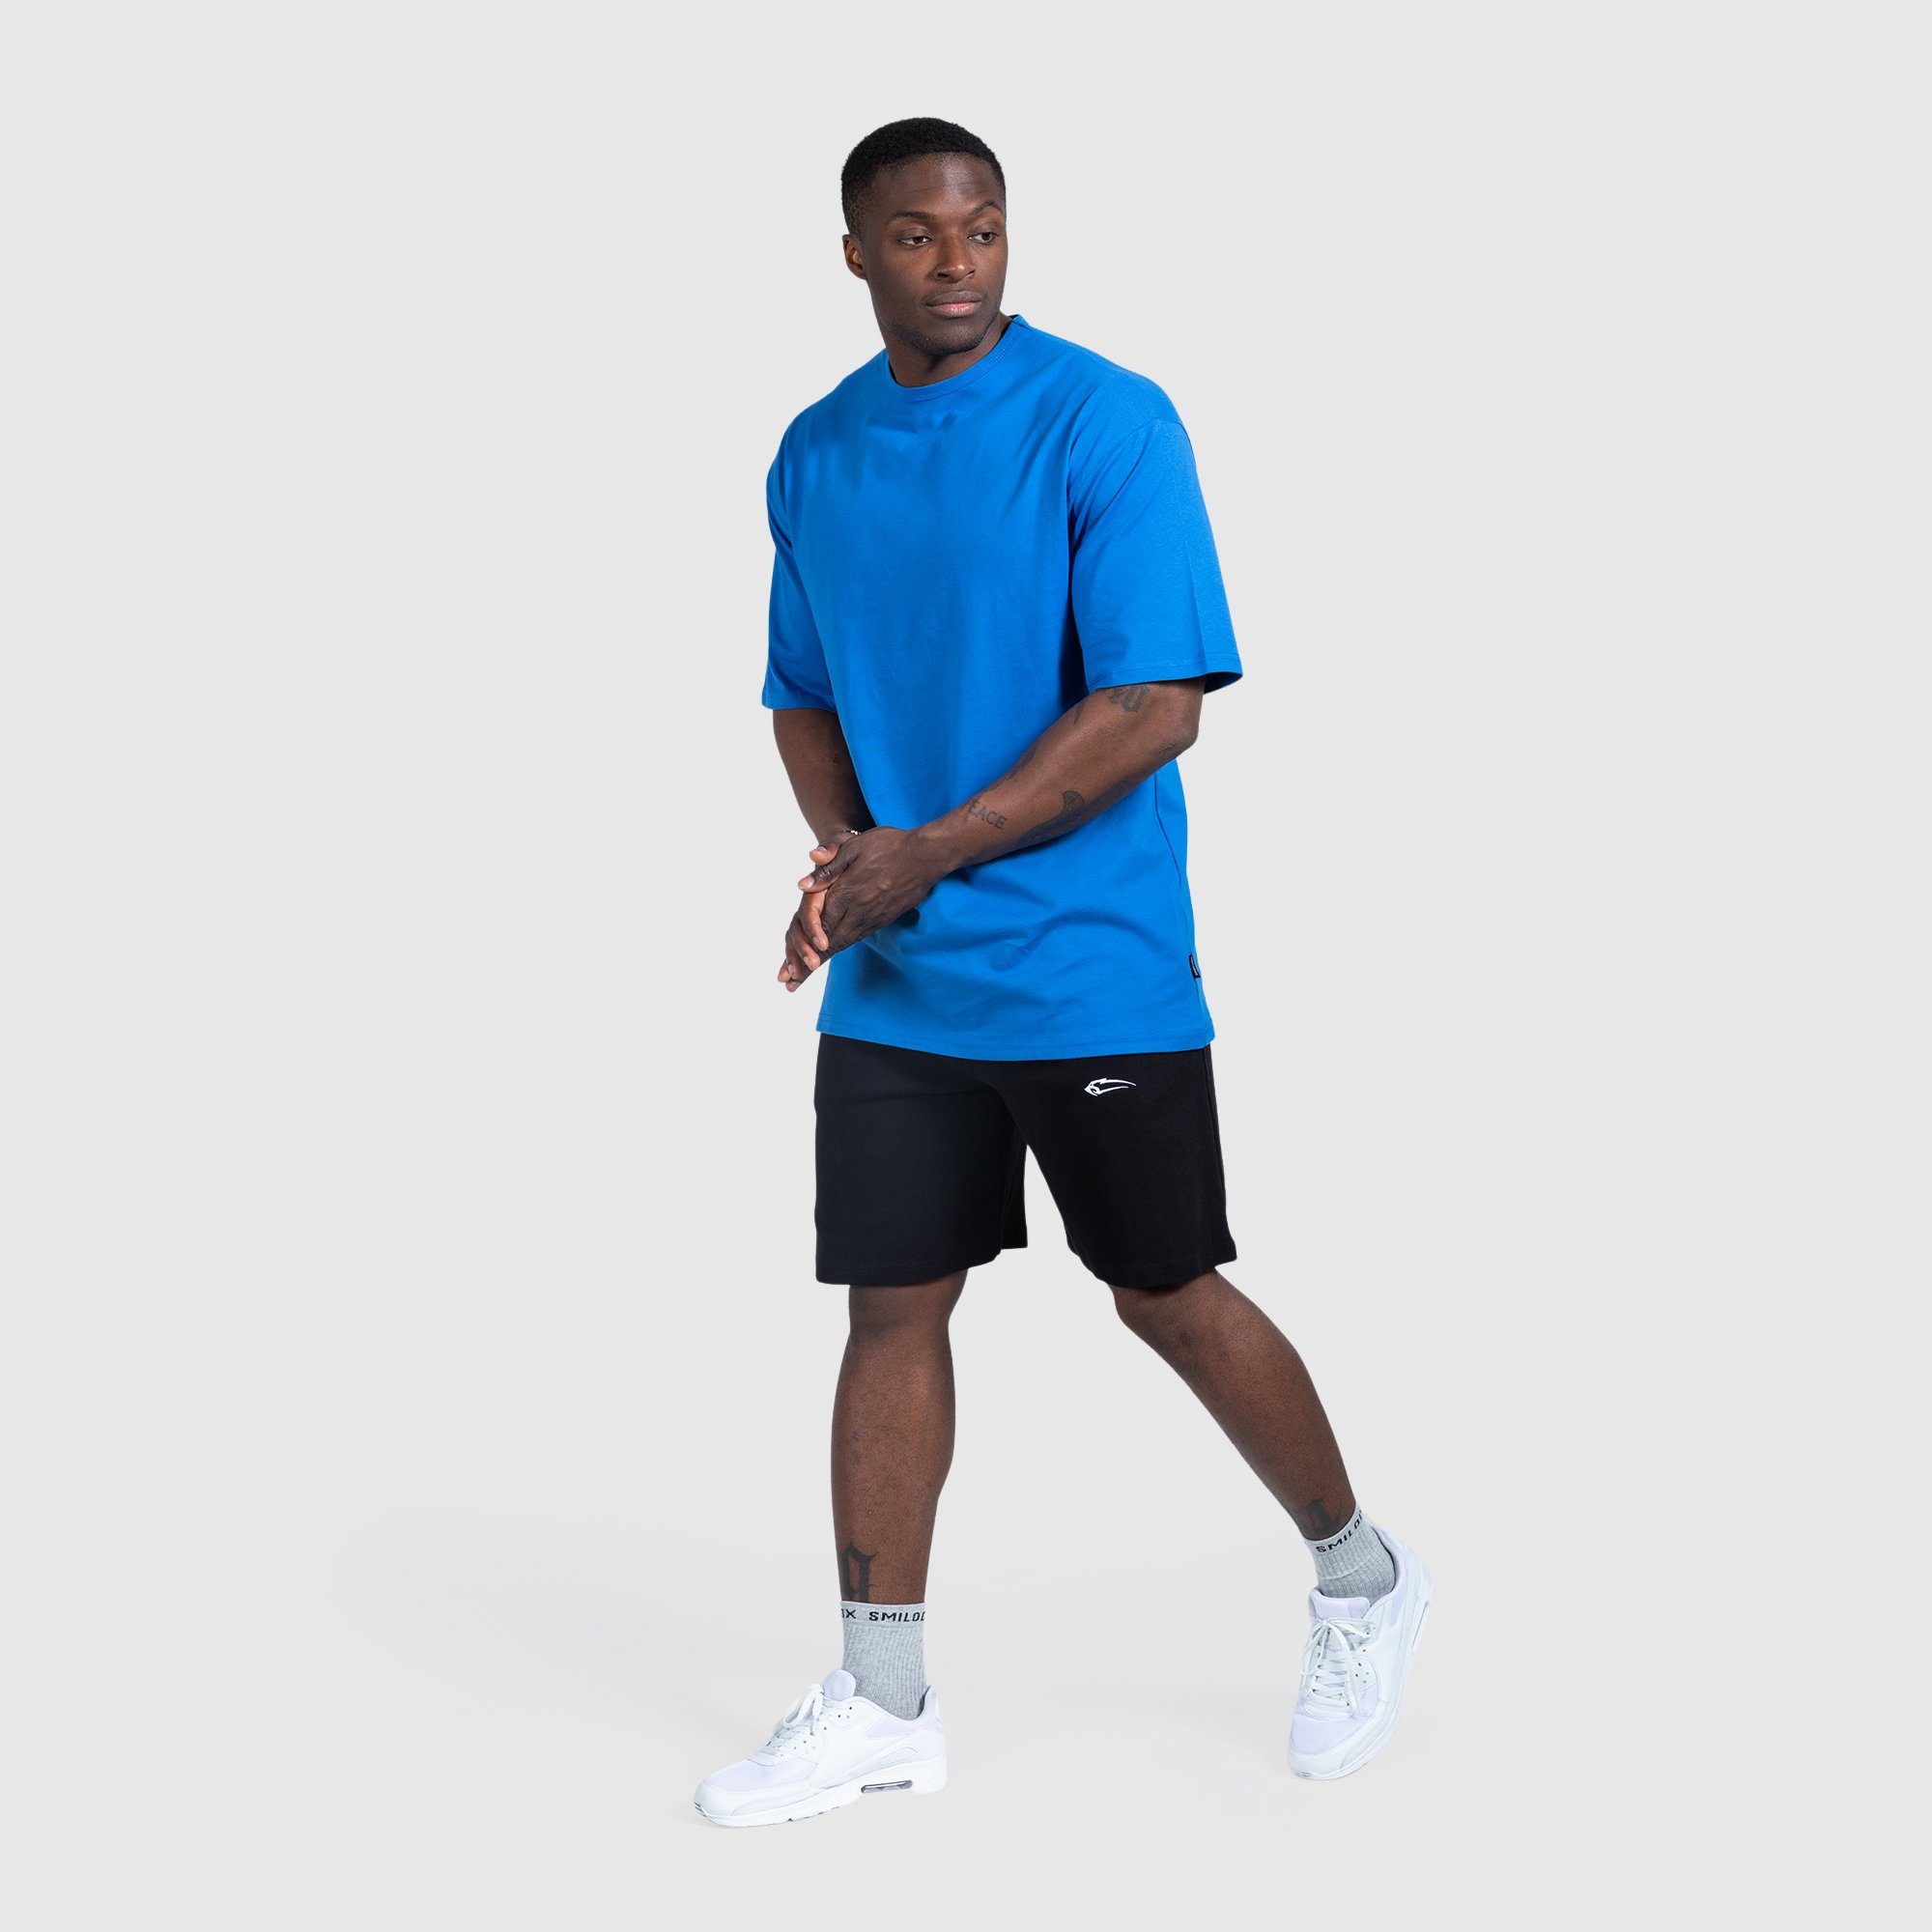 Smilodox Baumwolle Blau Ryan 100% Oversize, T-Shirt